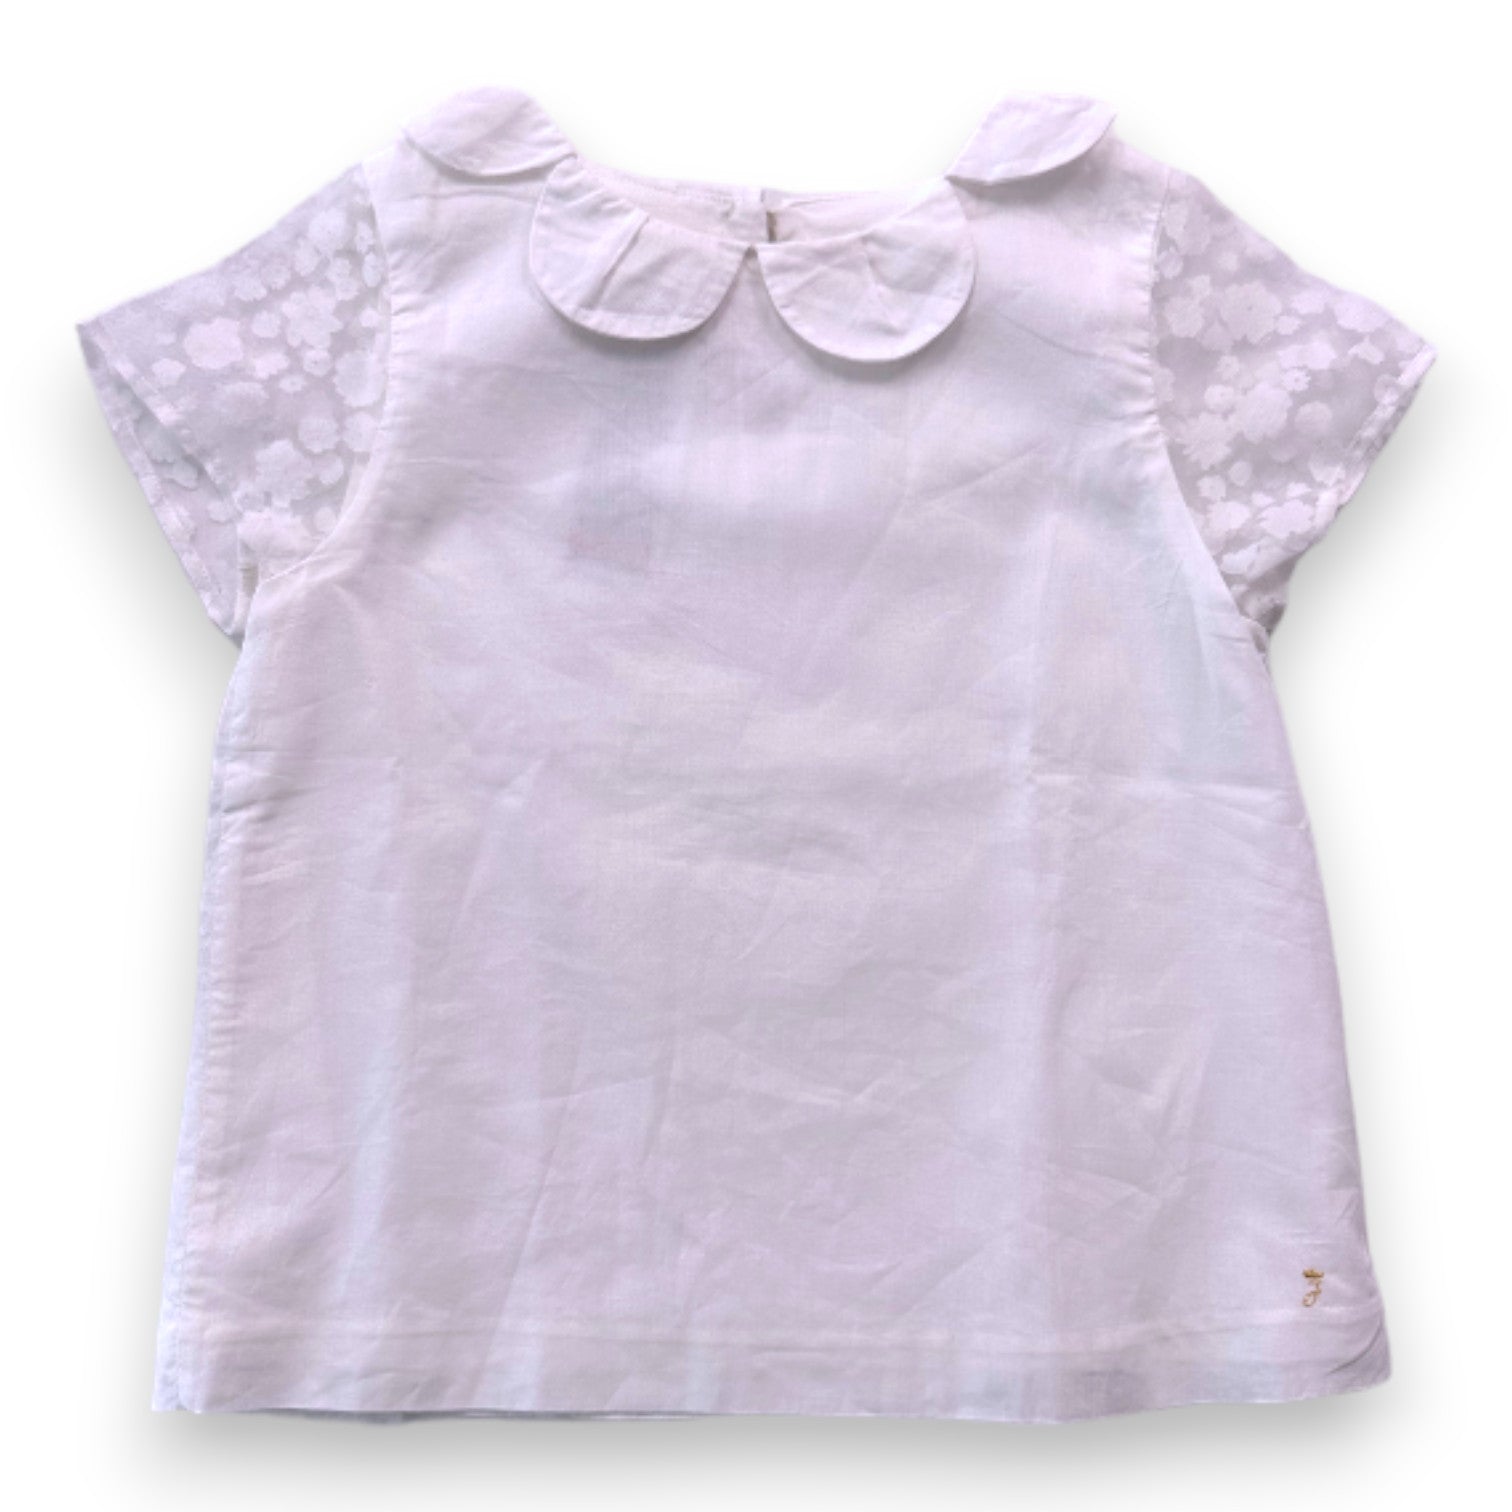 JACADI - t-shirt blanc avec manches transparantes à fleurs - 5 ans